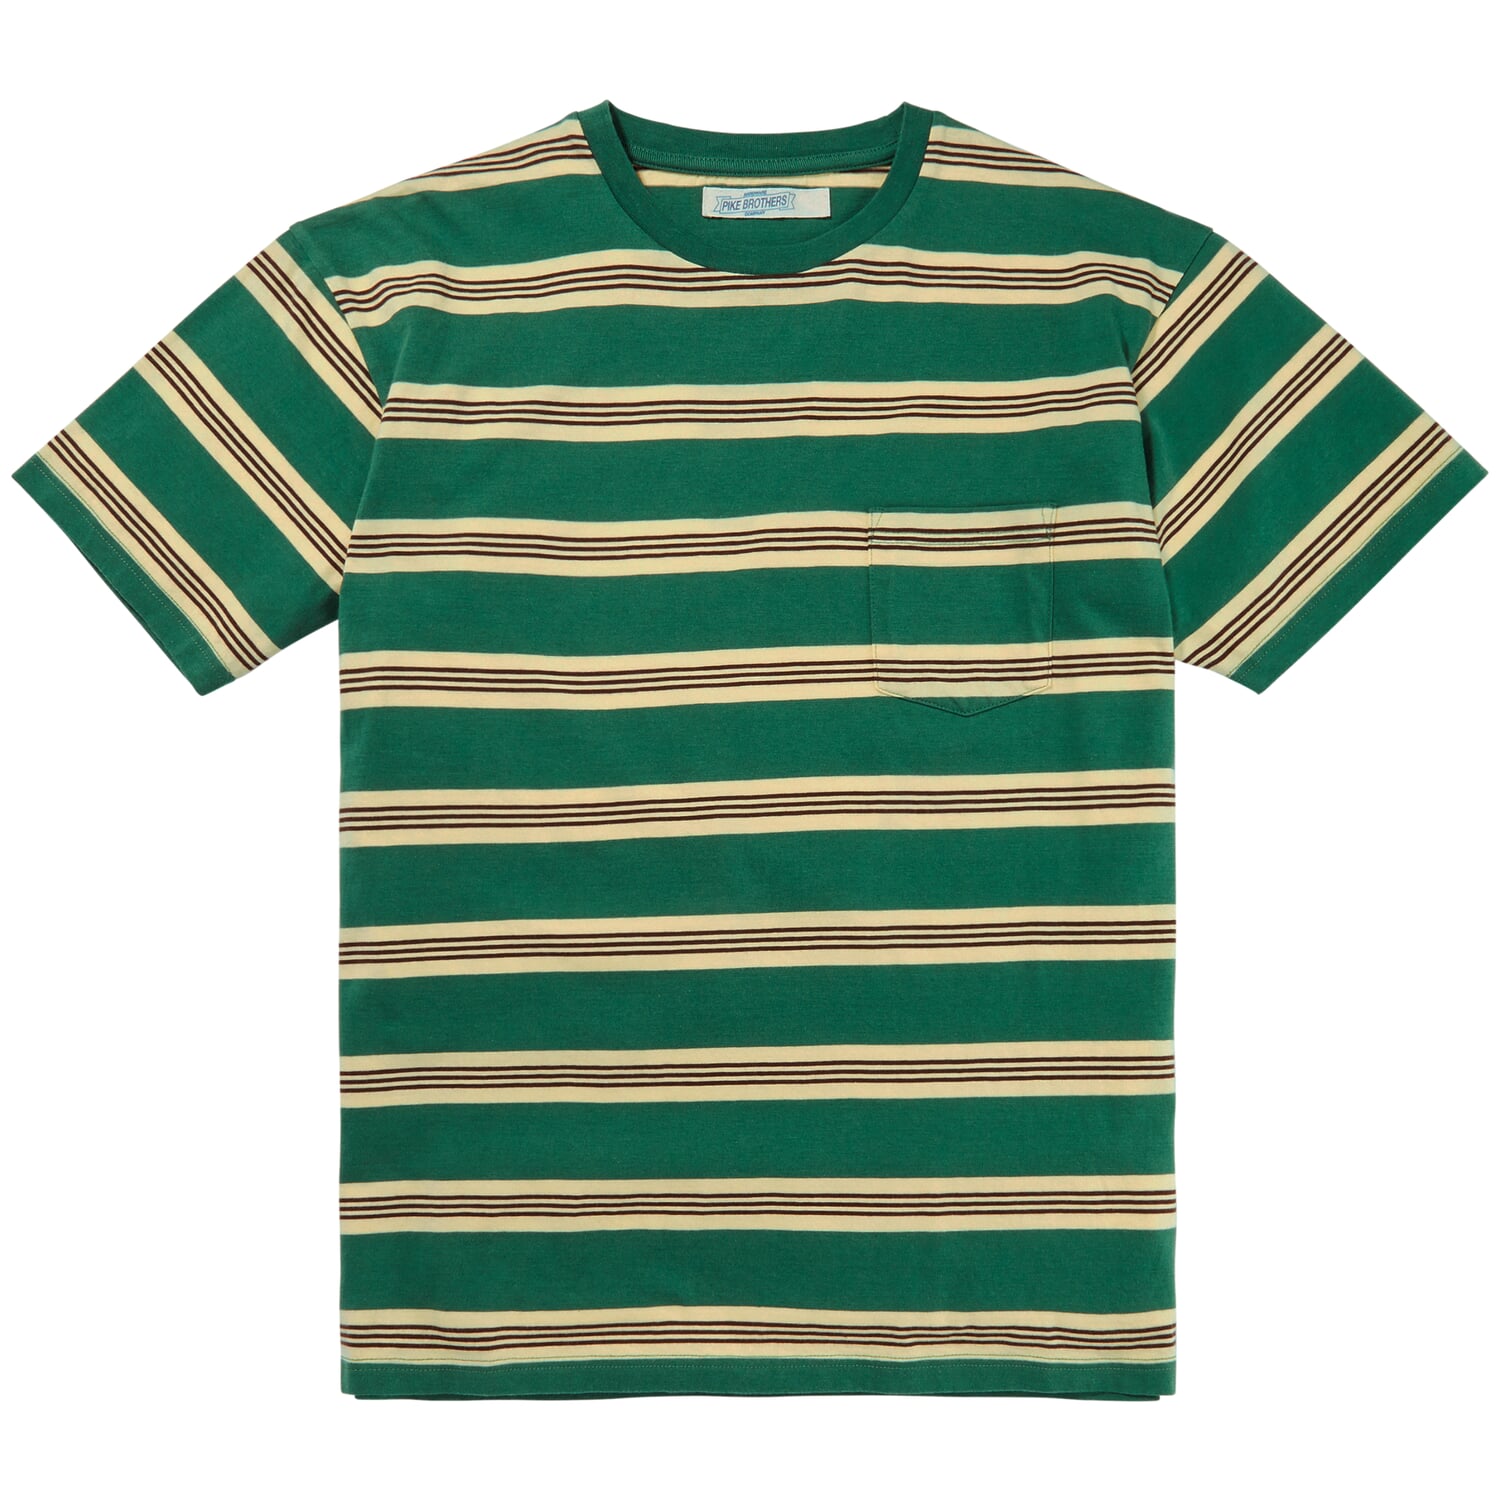 https://assets.manufactum.de/p/212/212418/212418_01.jpg/men-t-shirt-1971-stripes.jpg?profile=pdsmain_1500